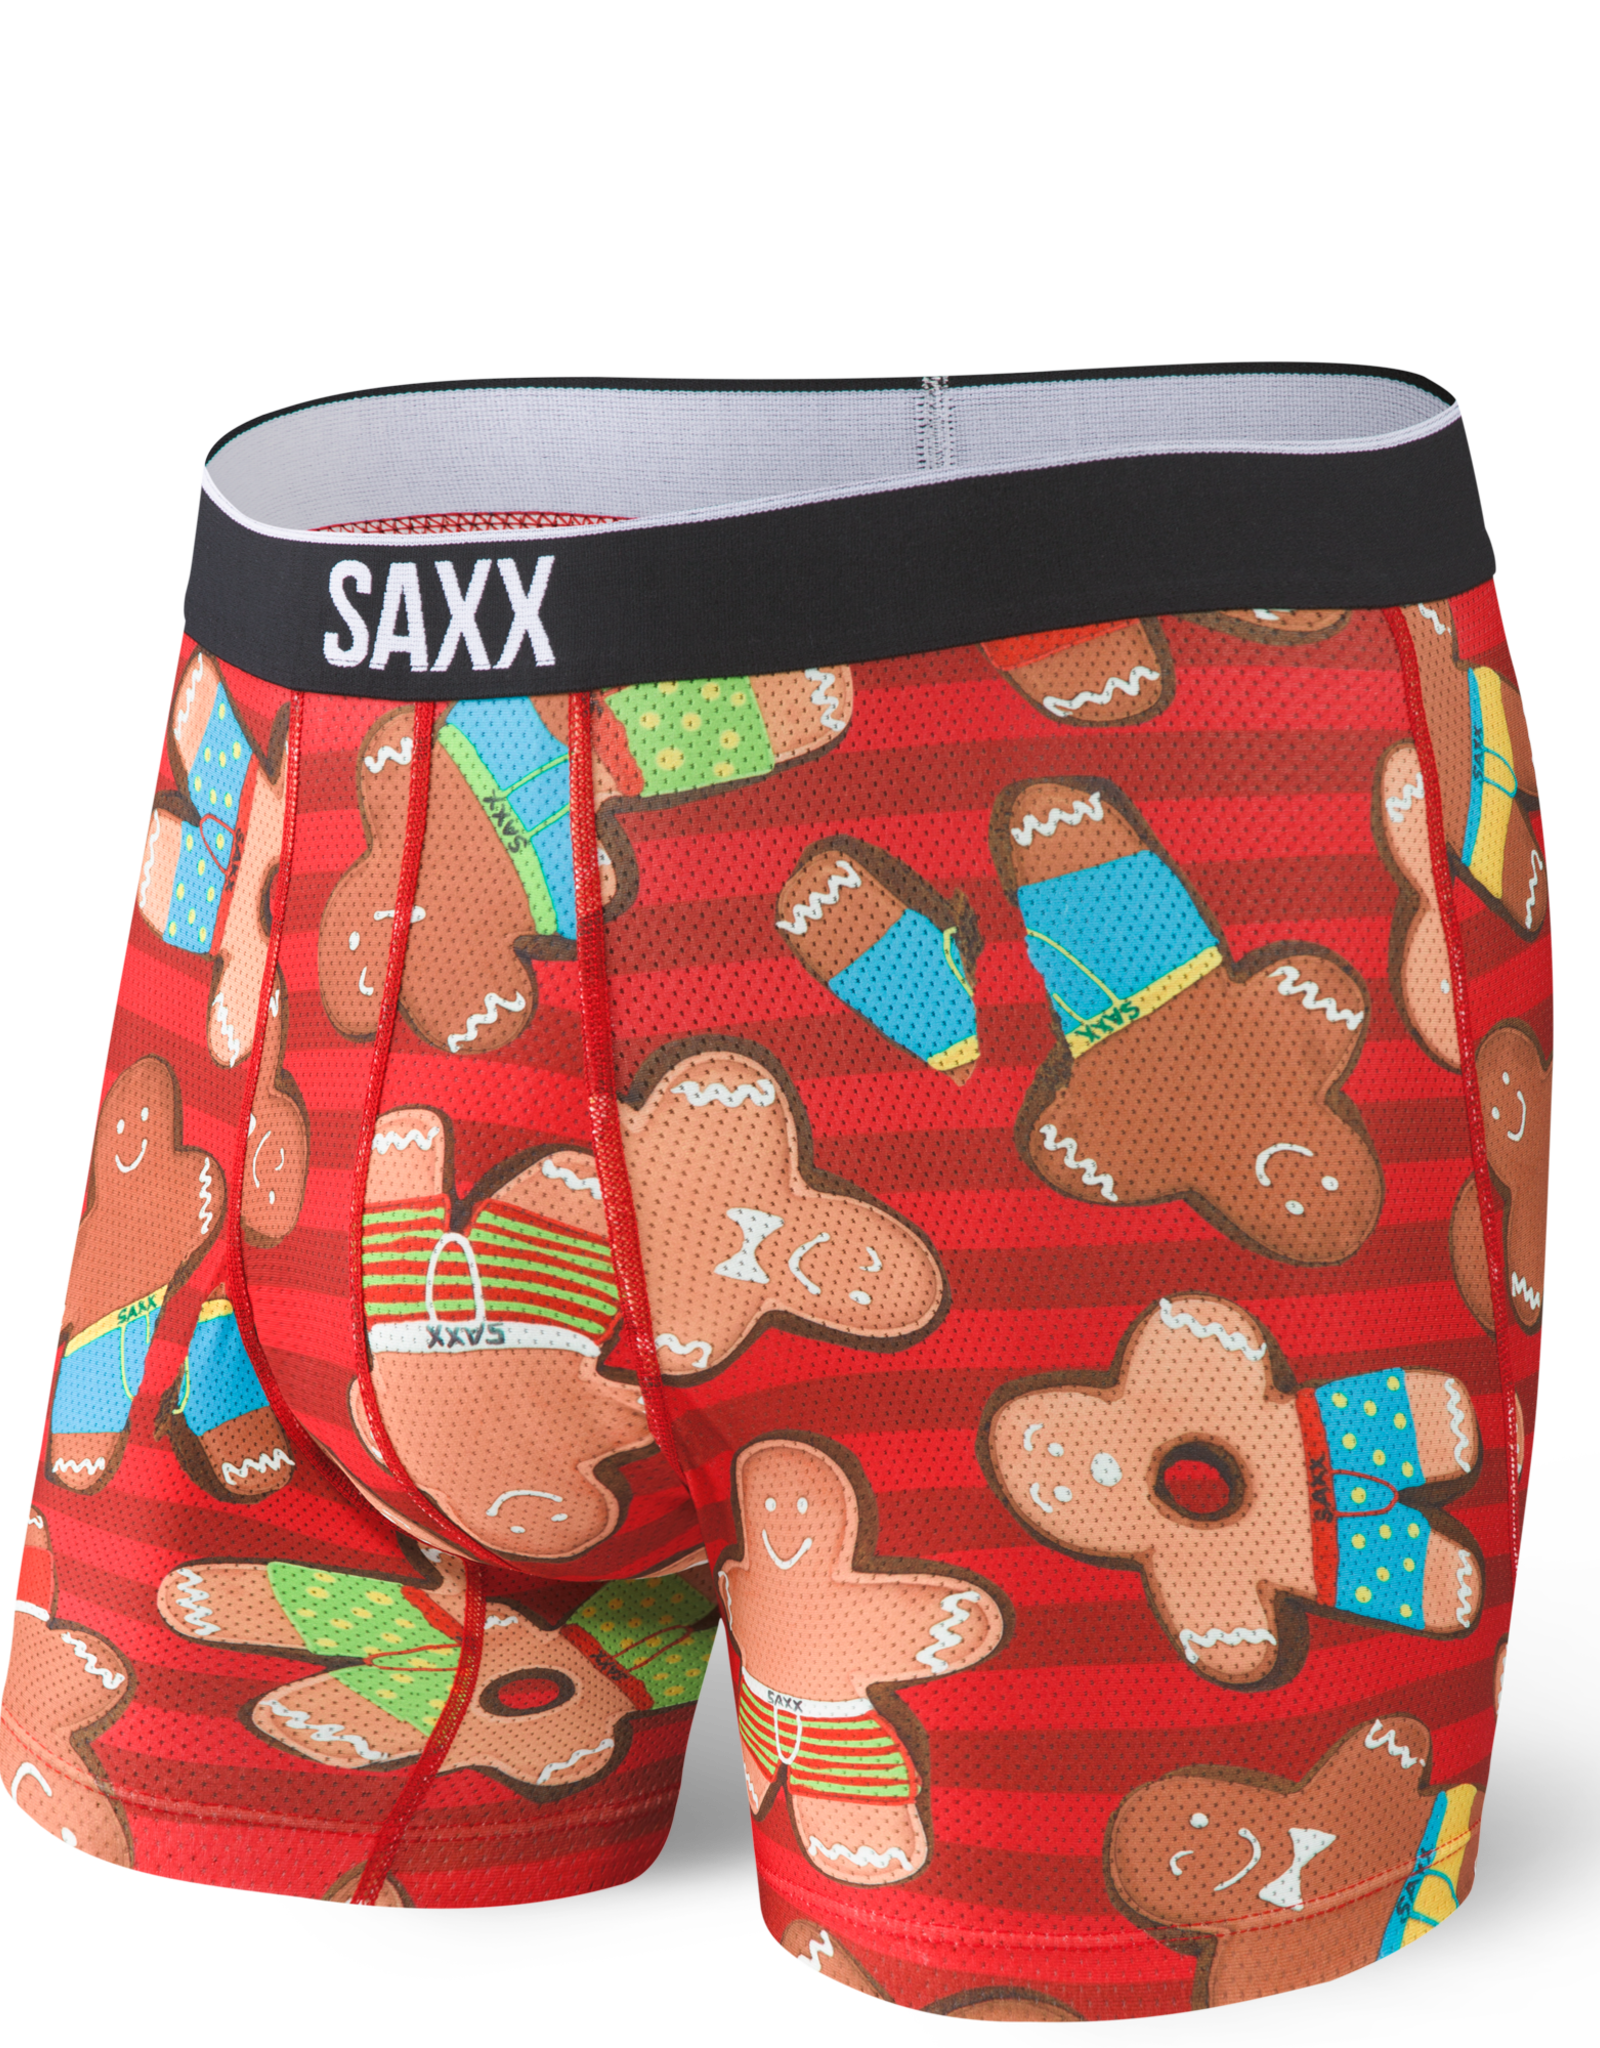 Saxx Saxx Volt SXBB29 Boxer Brief Men's